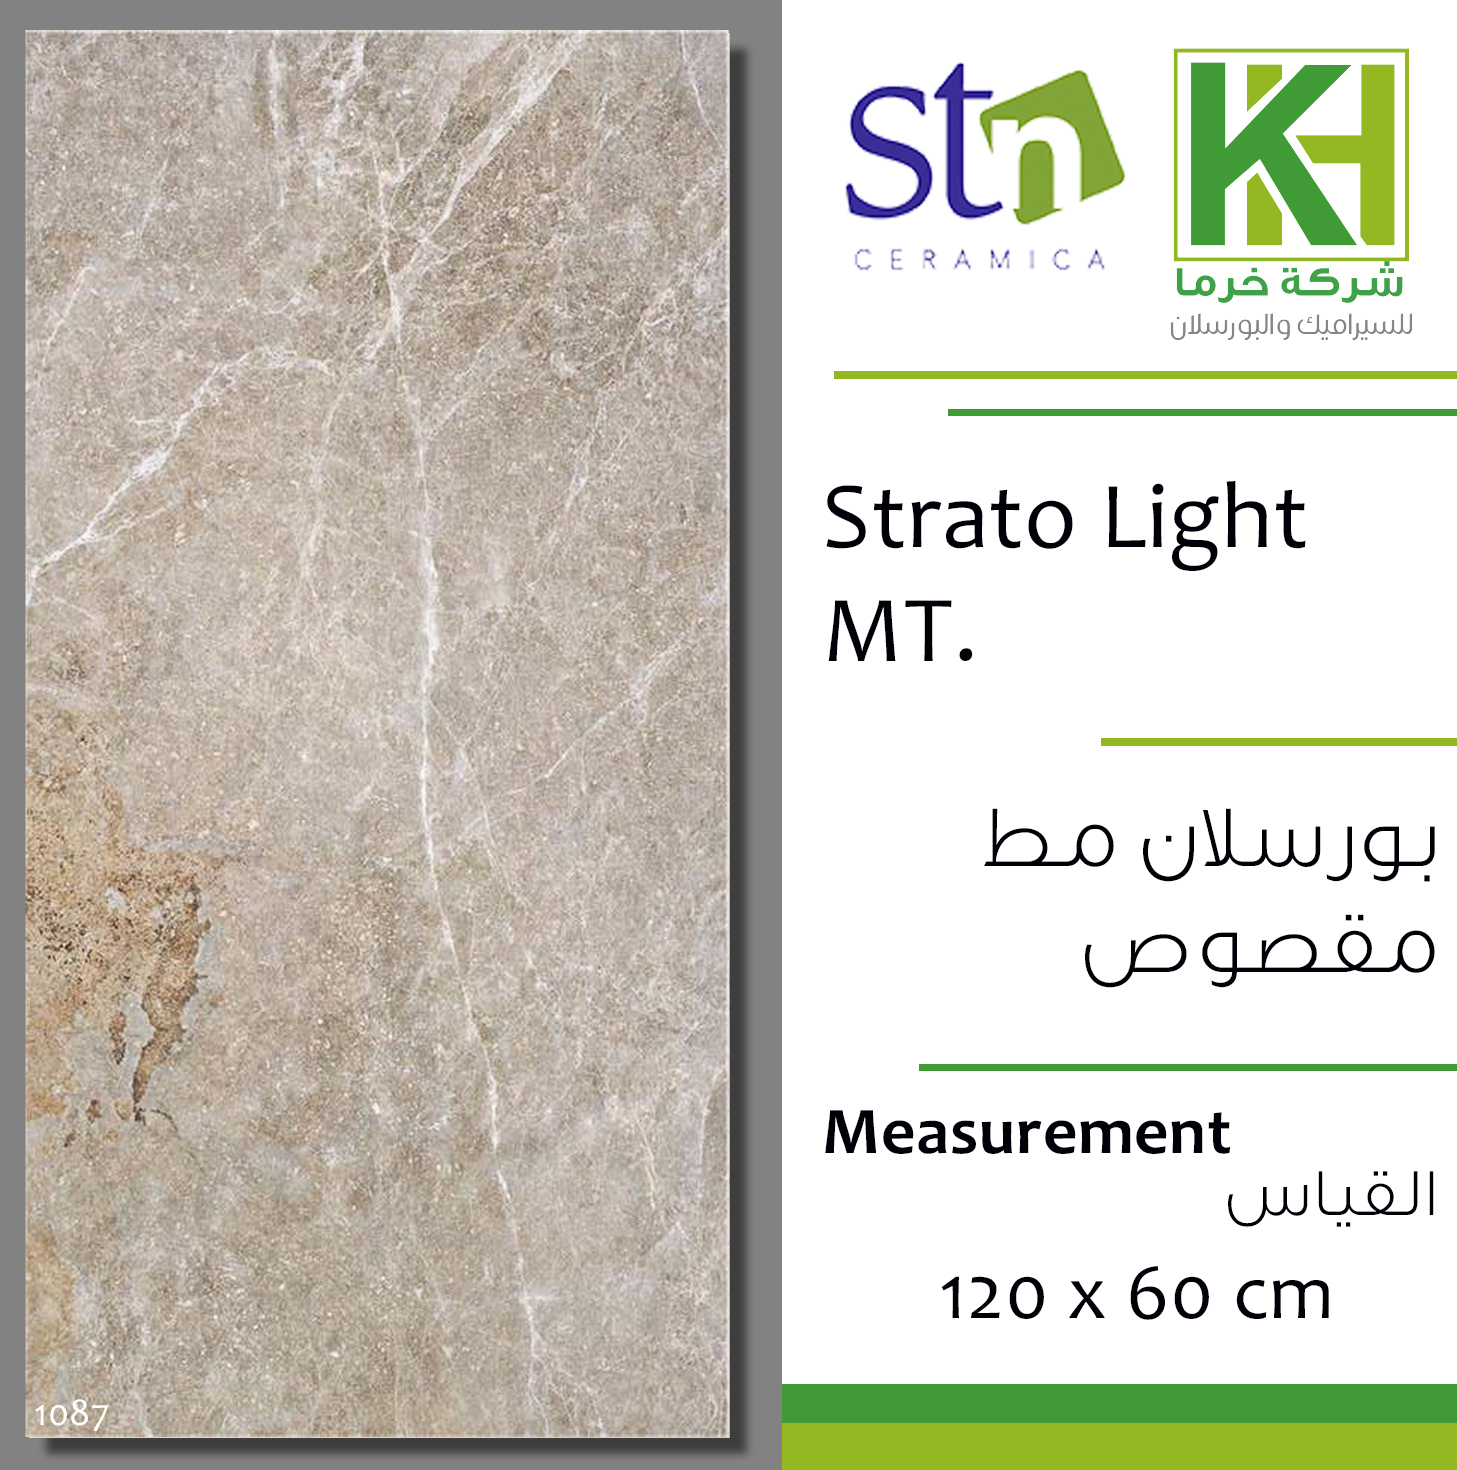 Picture of Spanish Porcelain tile 60x120cm Strato Light MT.